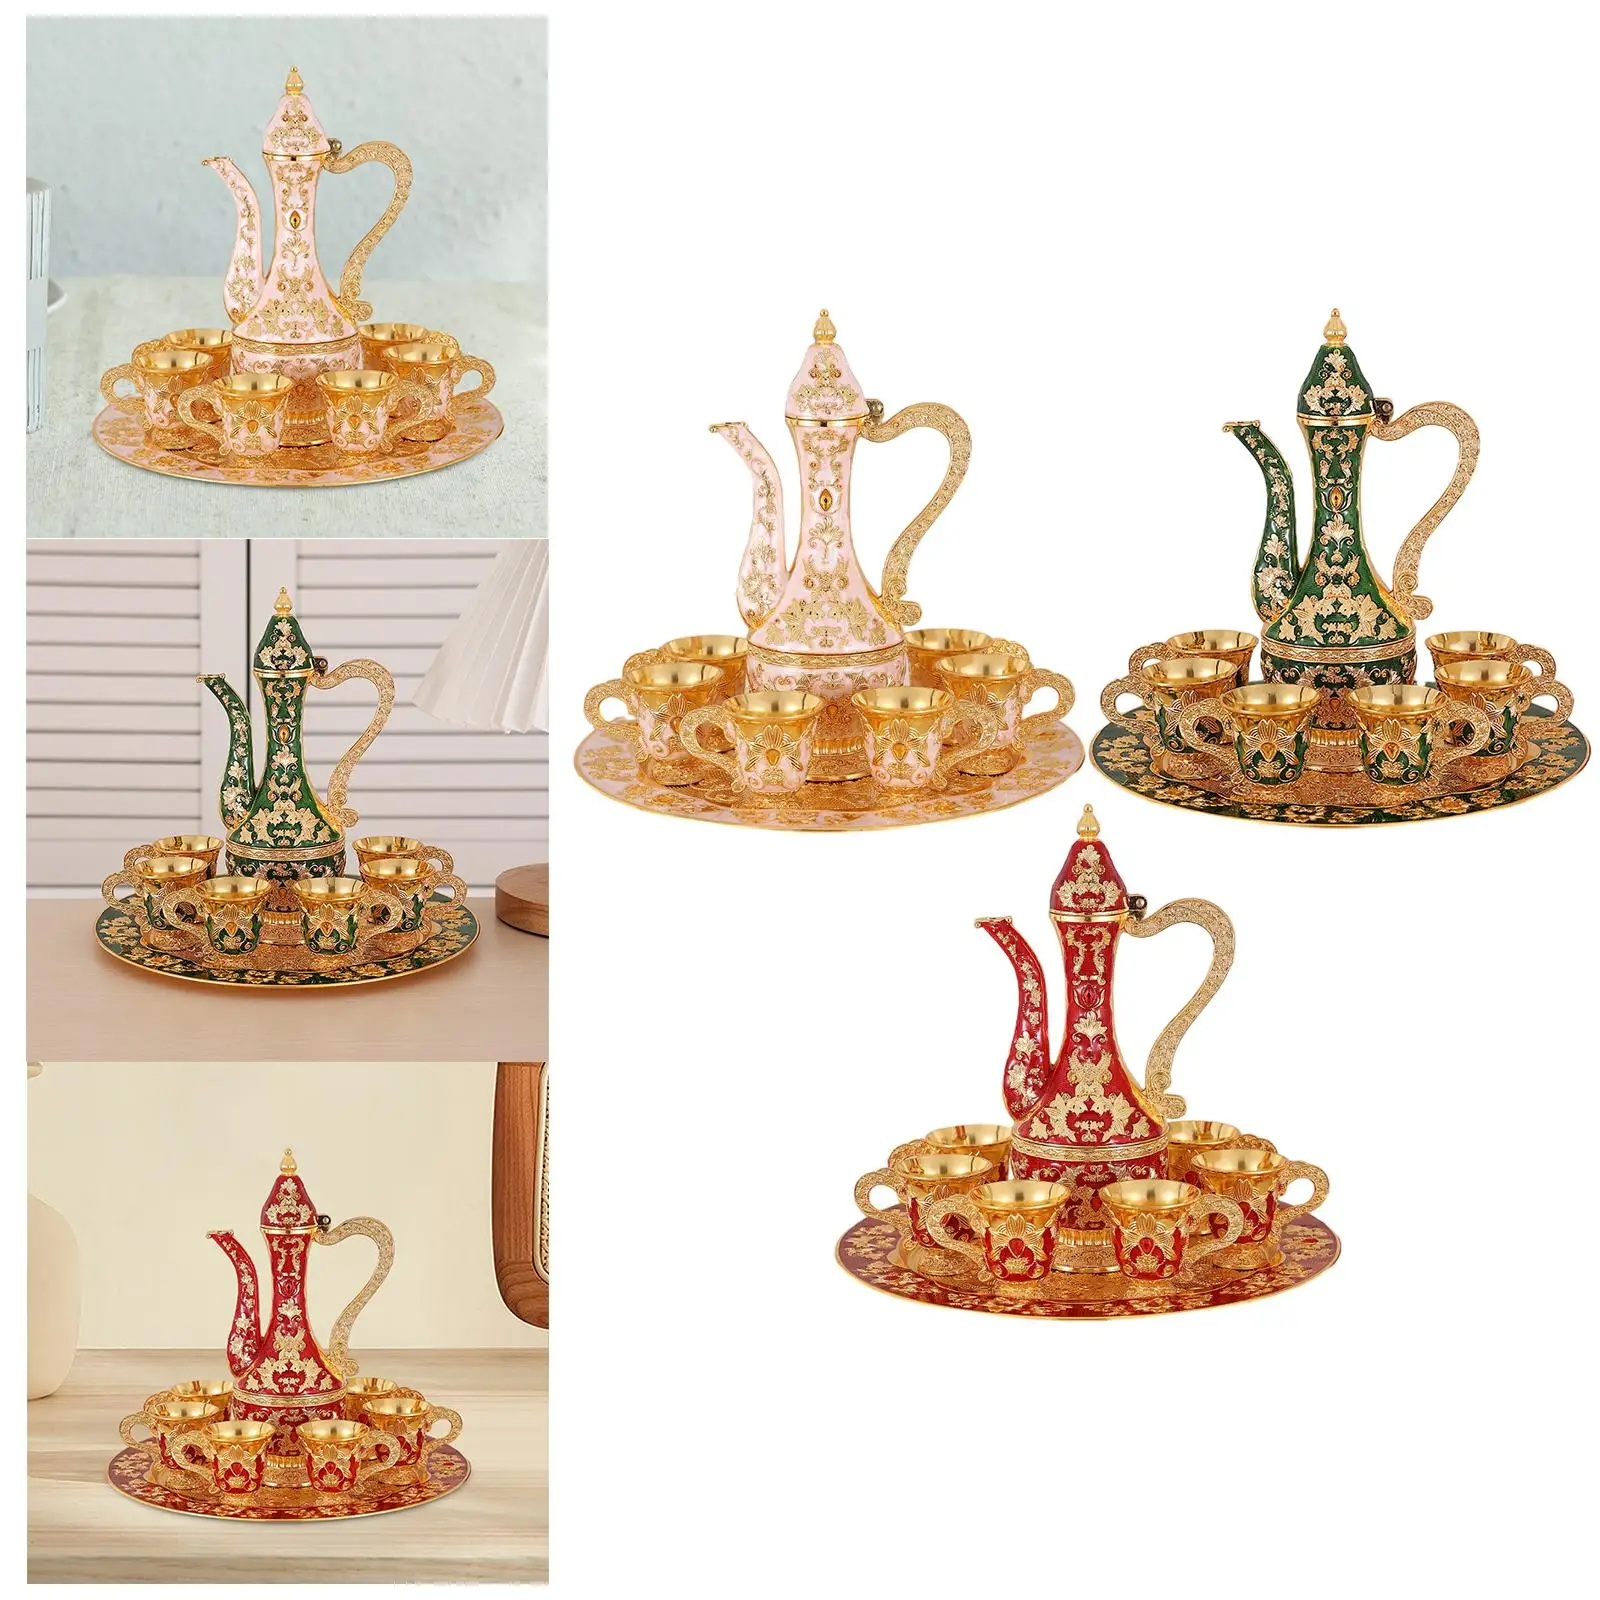 Vintage Turkish Coffee Pot Set Home Decor Tea Kettle Set for Wedding Gift Dining Table Tea Party Kitchen Ornaments